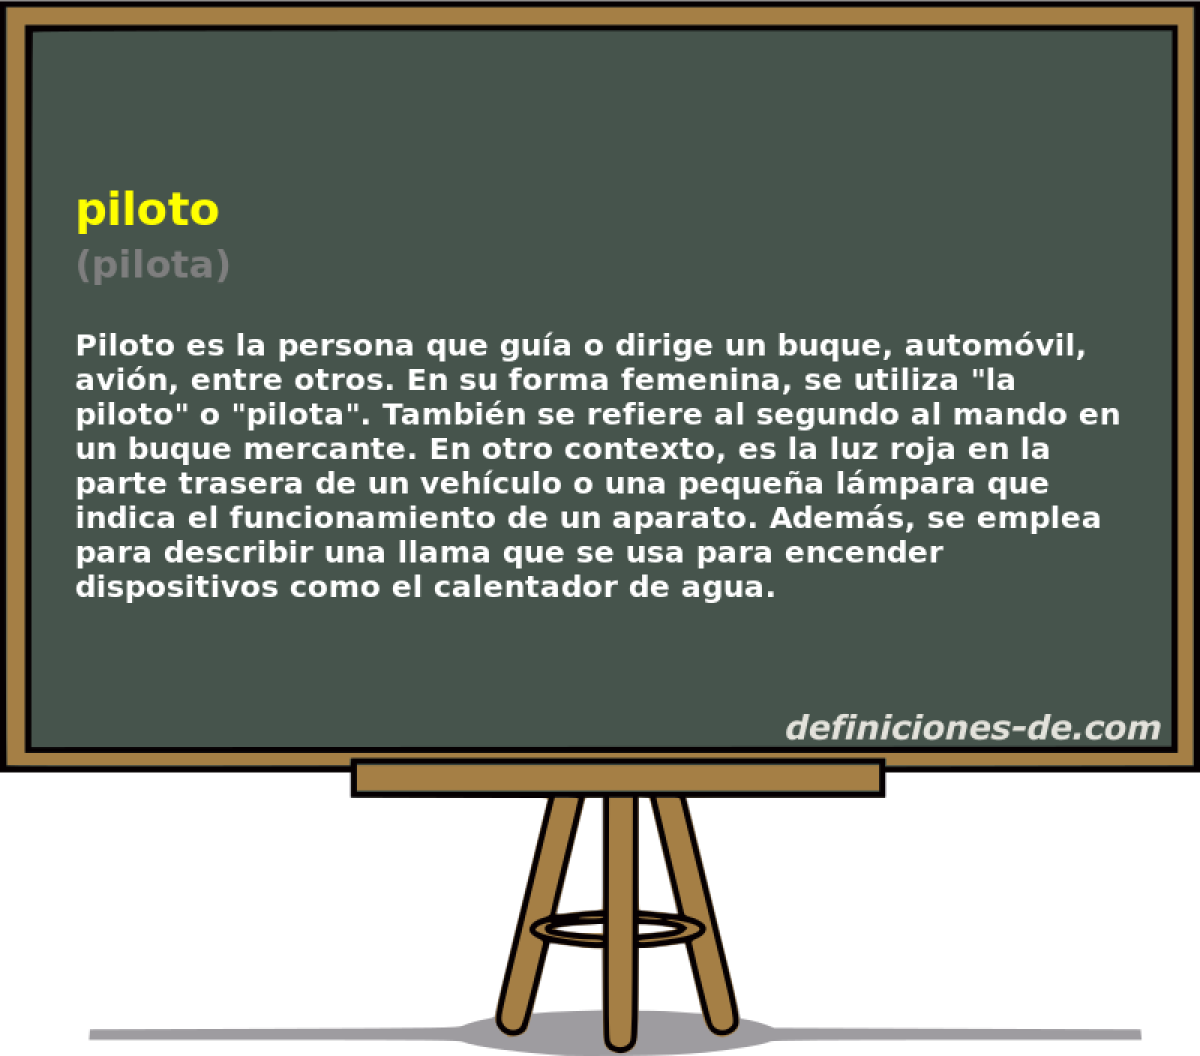 piloto (pilota)